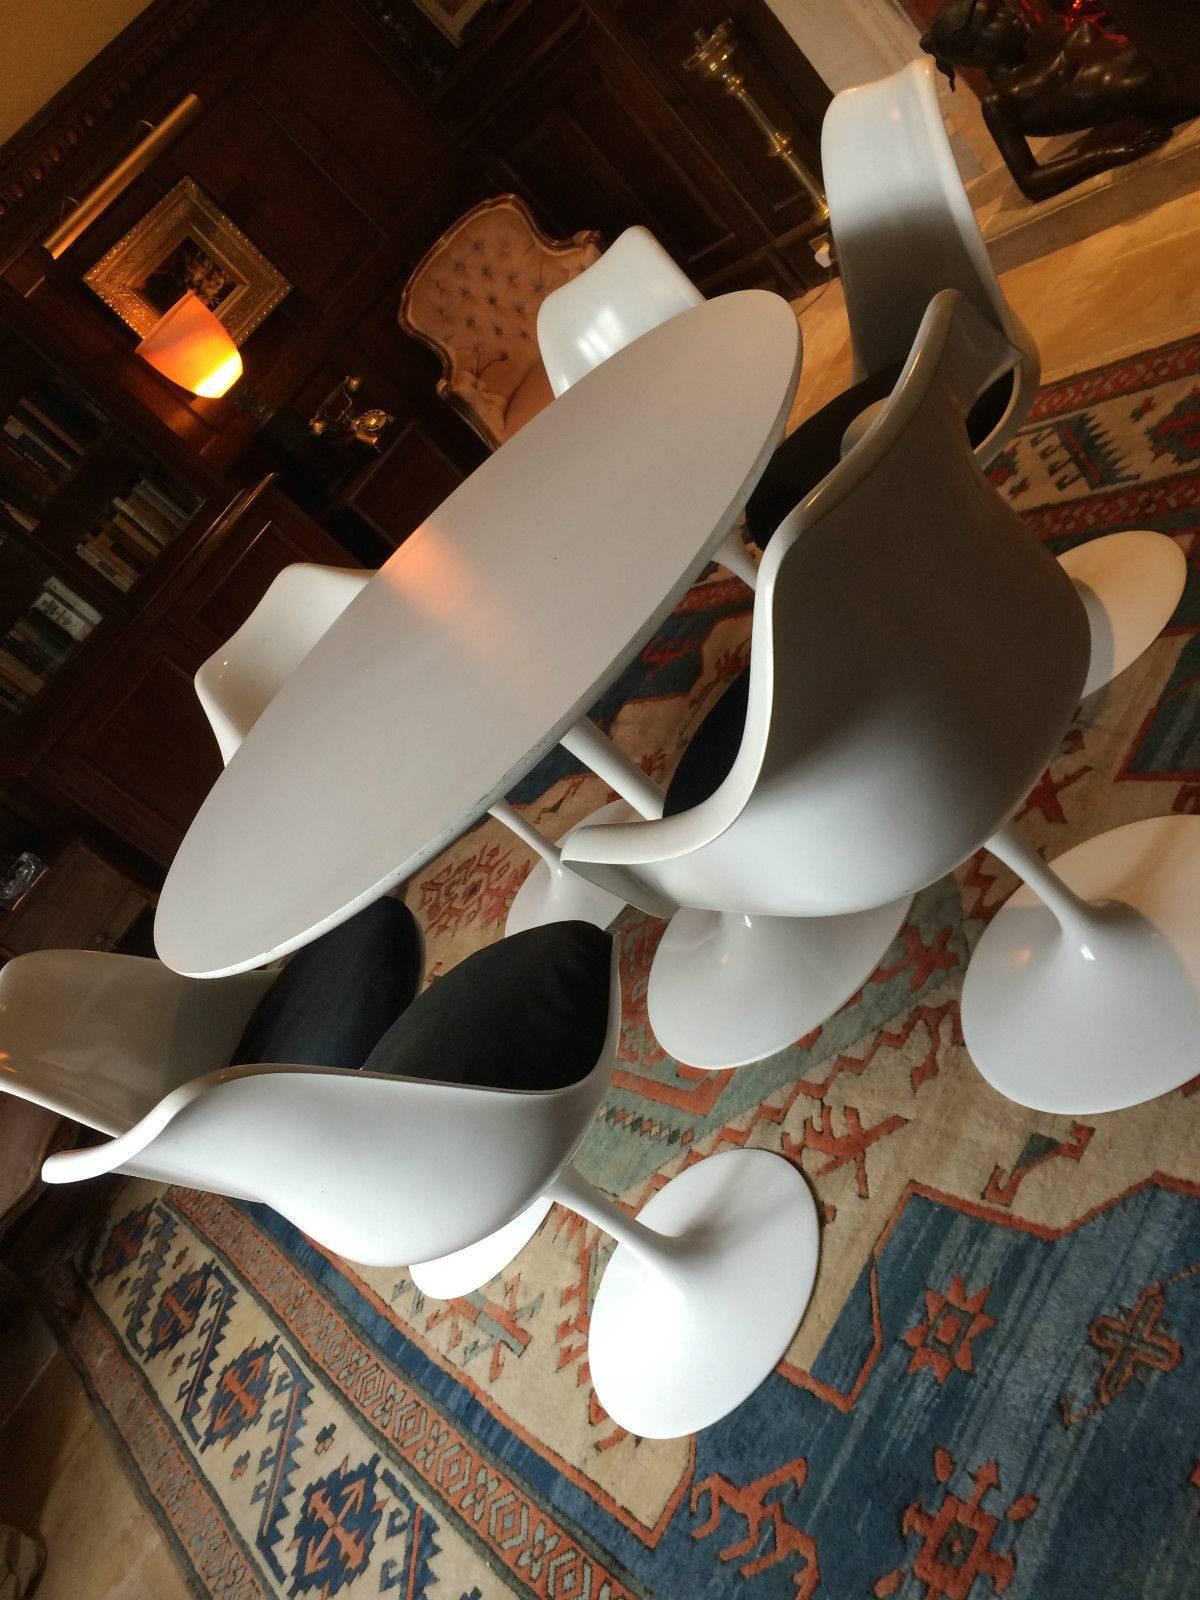 English Eero Saarinen Oval Tulip Dining Table and Six Dining Chairs, Vintage Retro